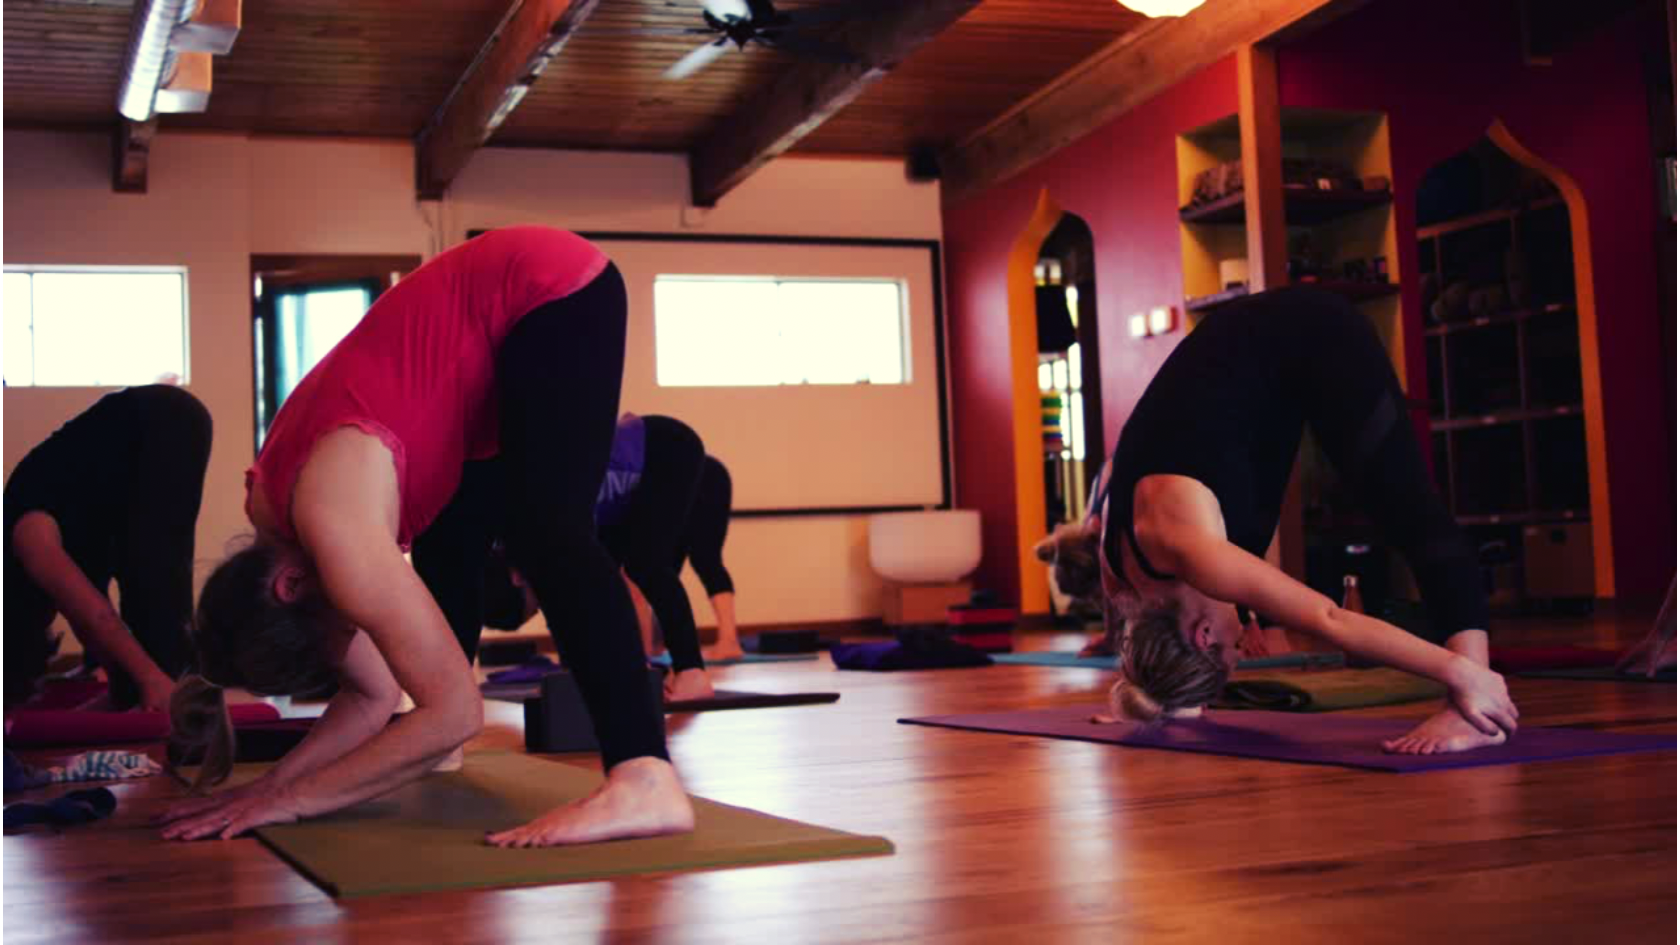 Yoga Students in yoga studio yoga class using asivana mats and props